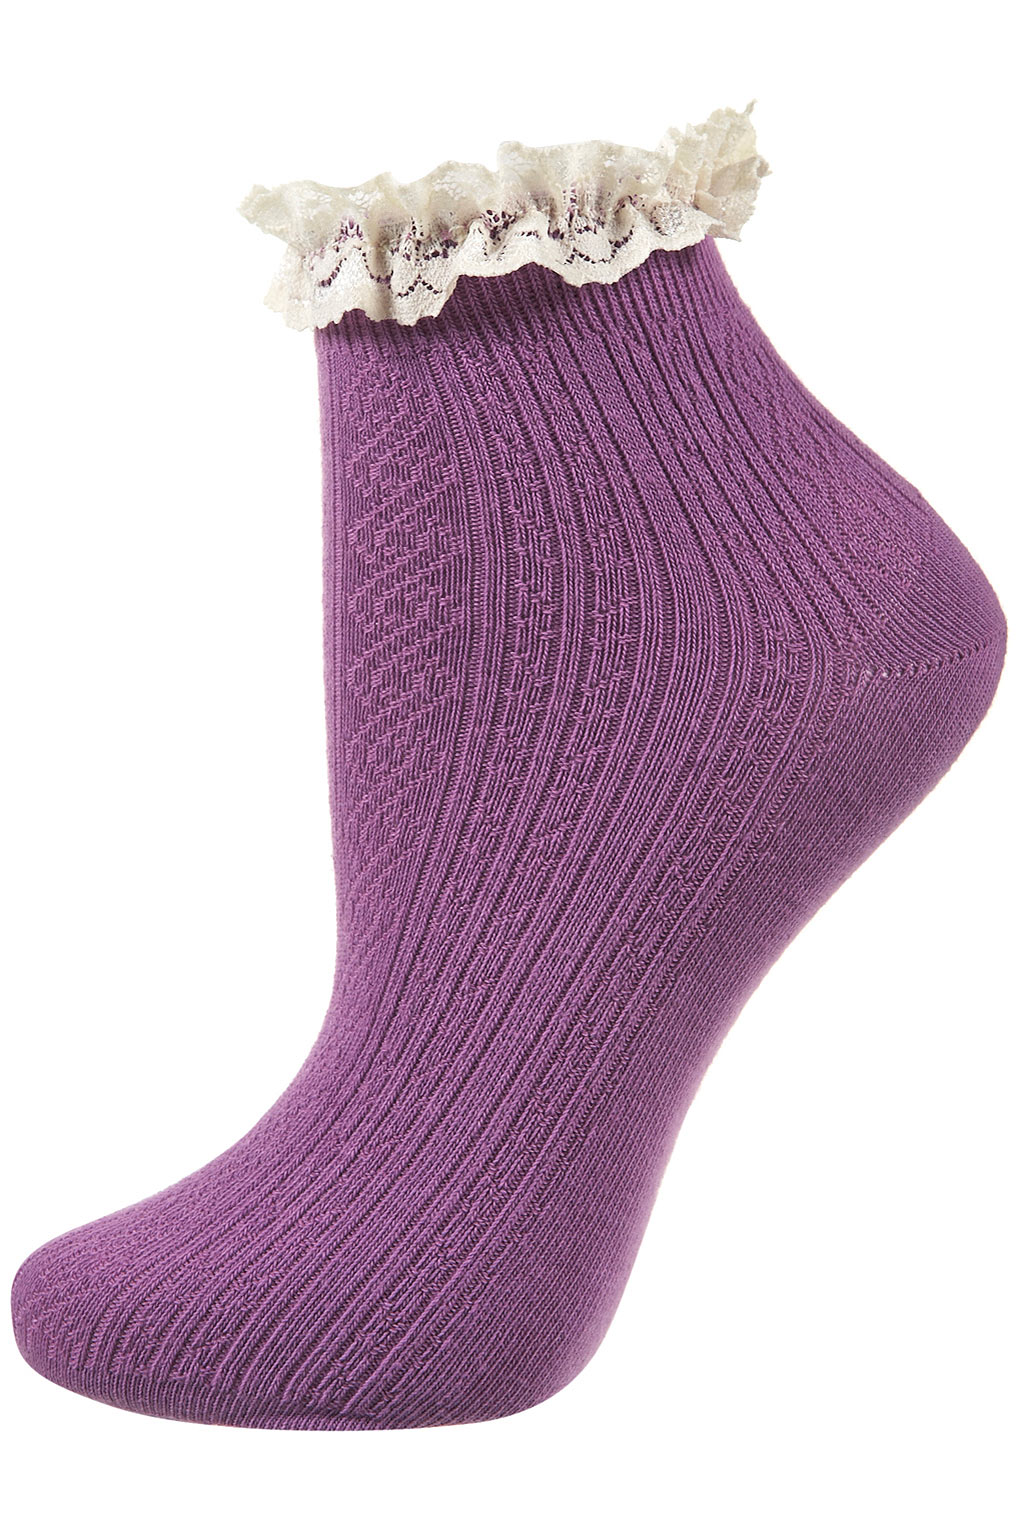 Lyst - Topshop Lace Trim Ankle Socks in Purple